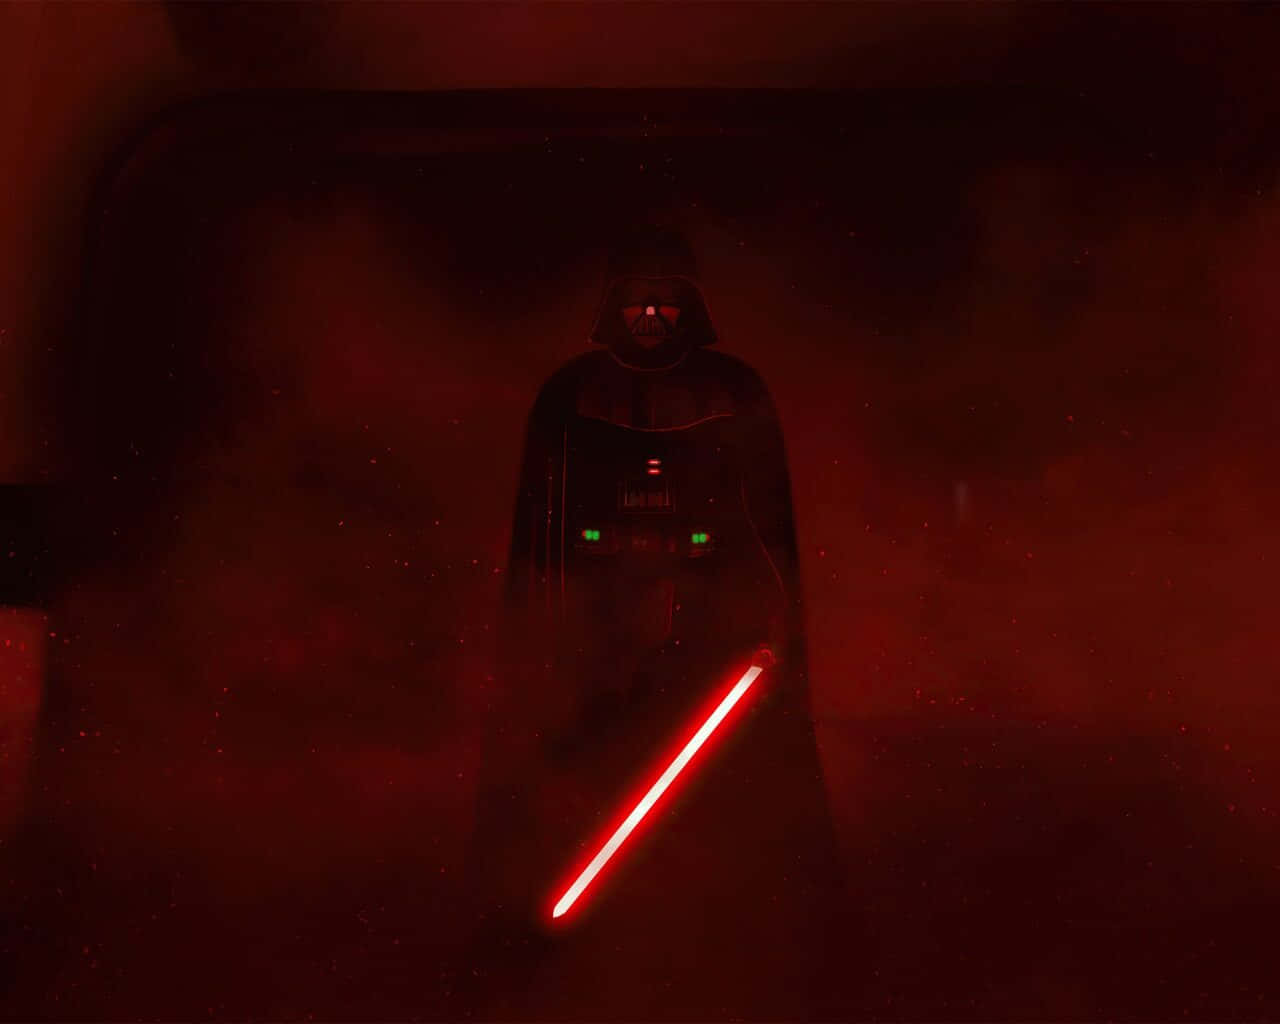 Darth Vader-- Dark lord of the Galactic Empire